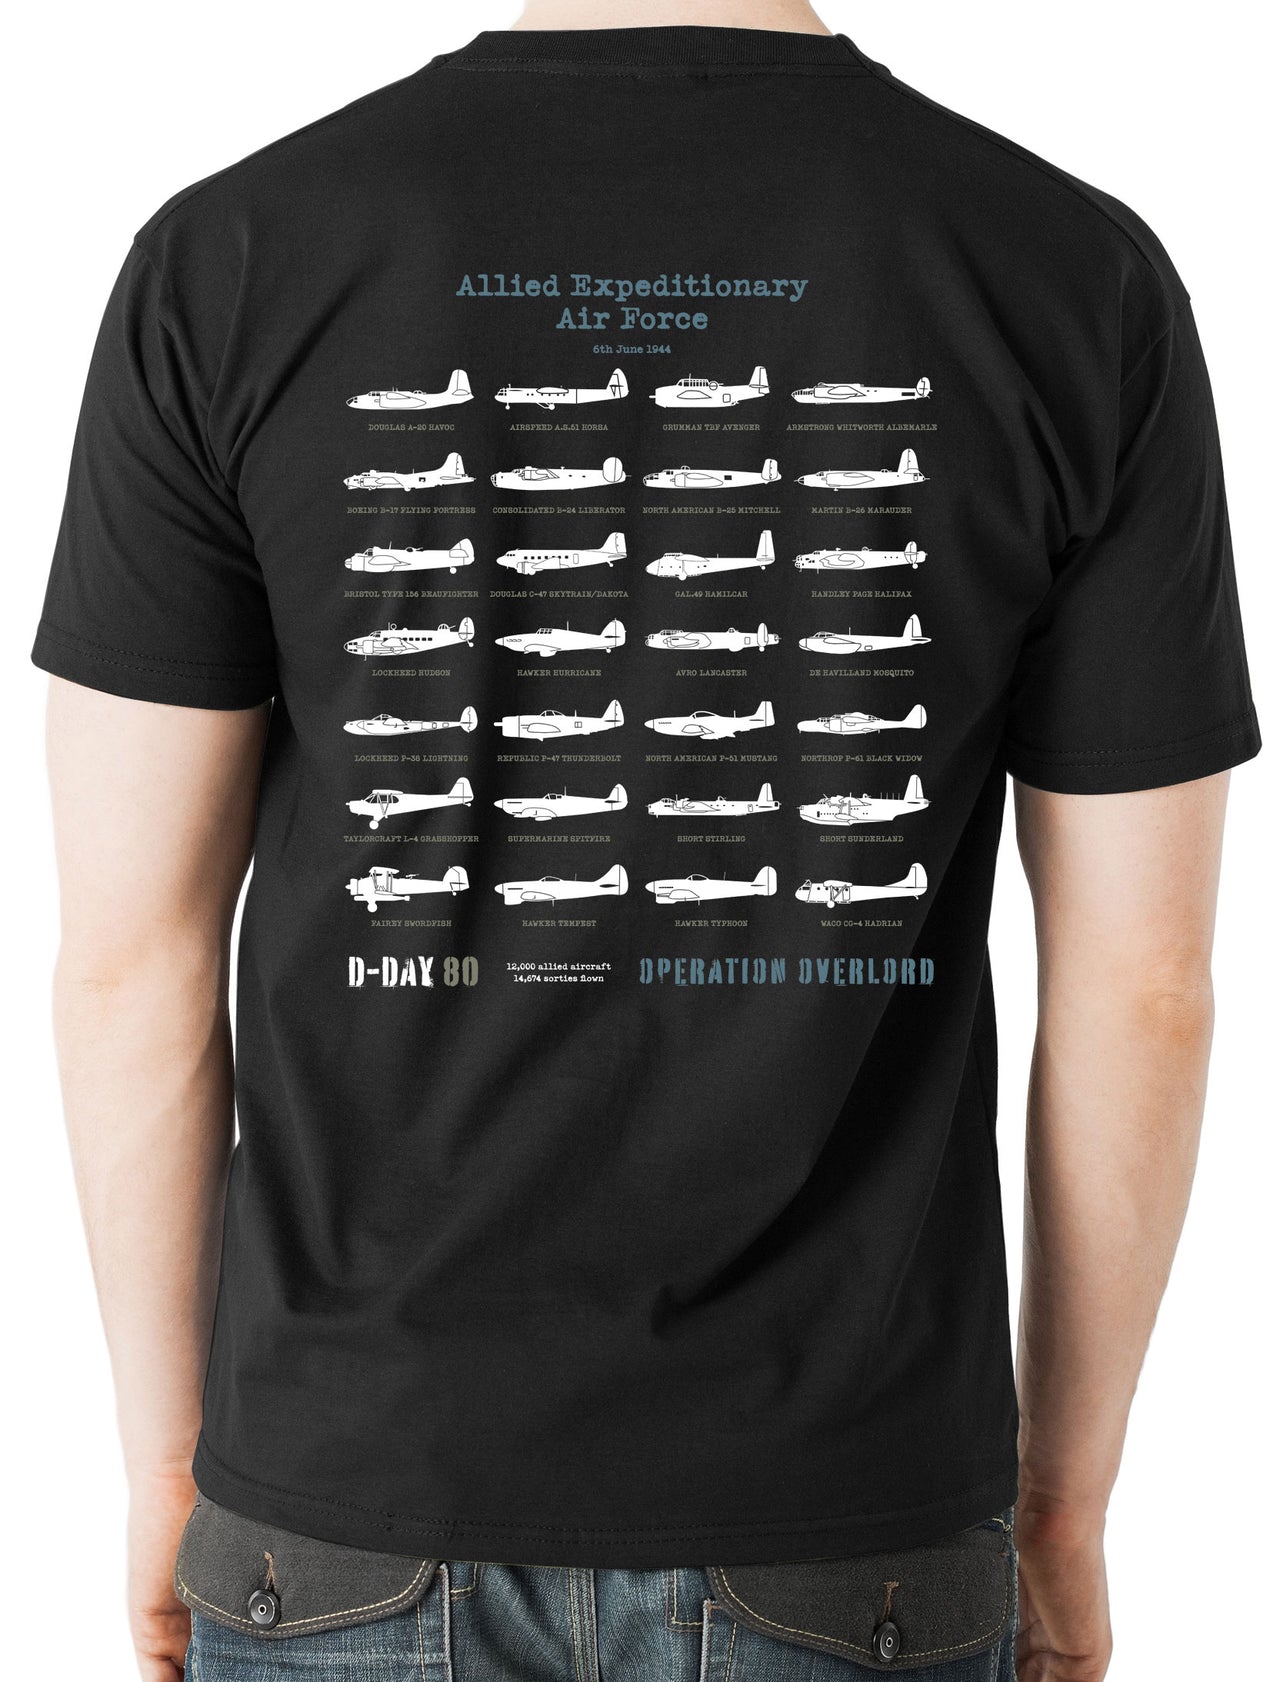 D-Day Avenger - T-shirt